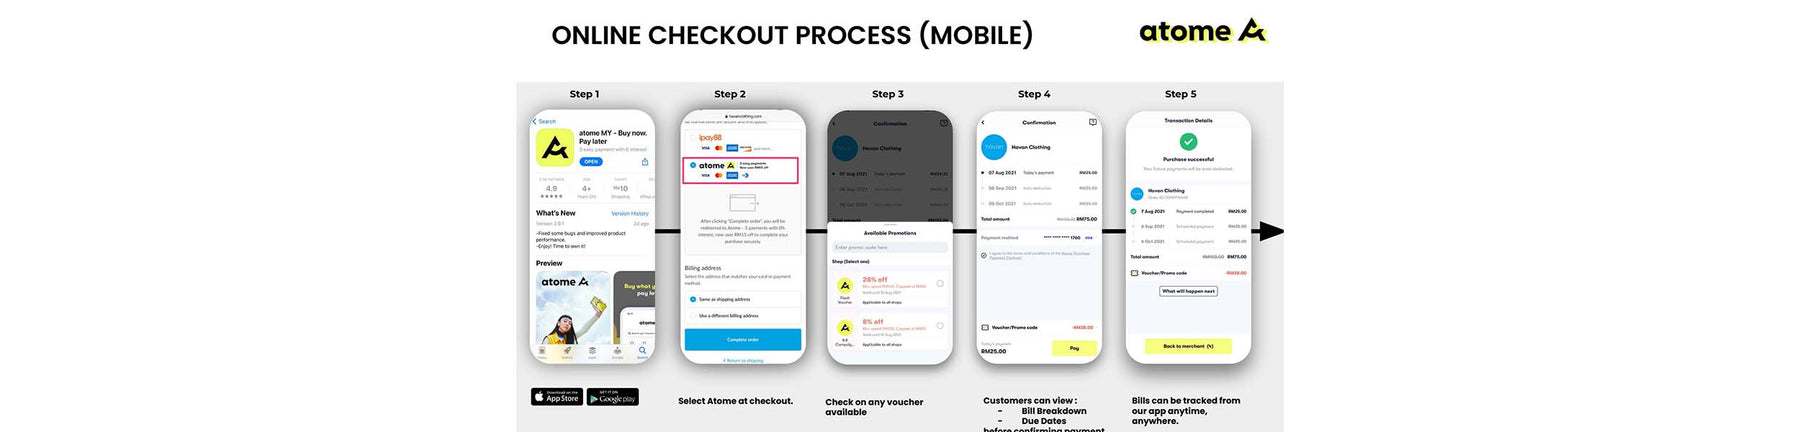 Atome online checkout process (mobile)